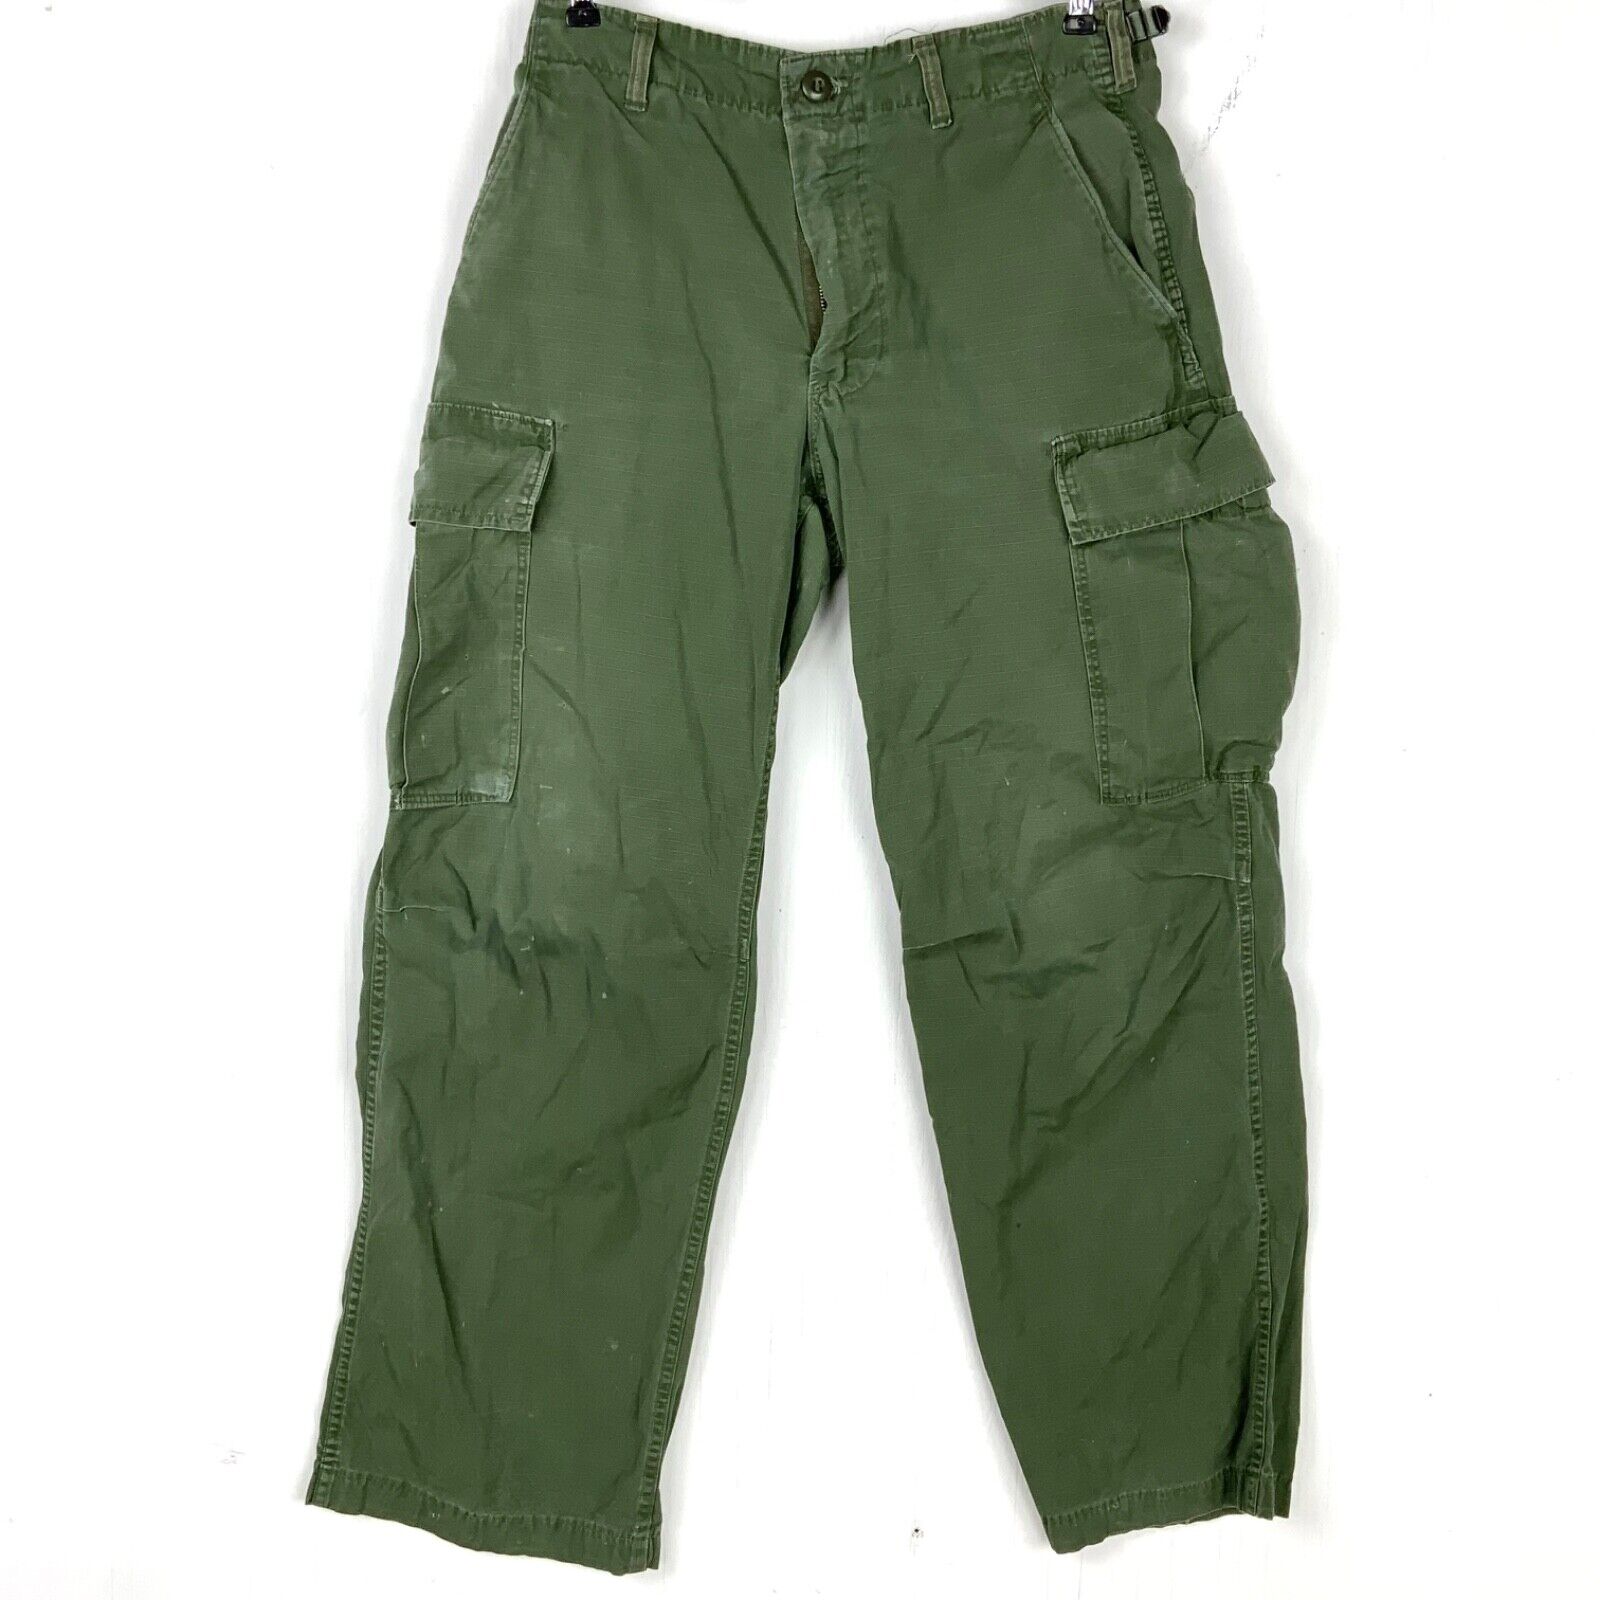 Vintage Military Og-107 Trousers Size 28 1/2 x 31 Green Vietnam Era 60s 70s